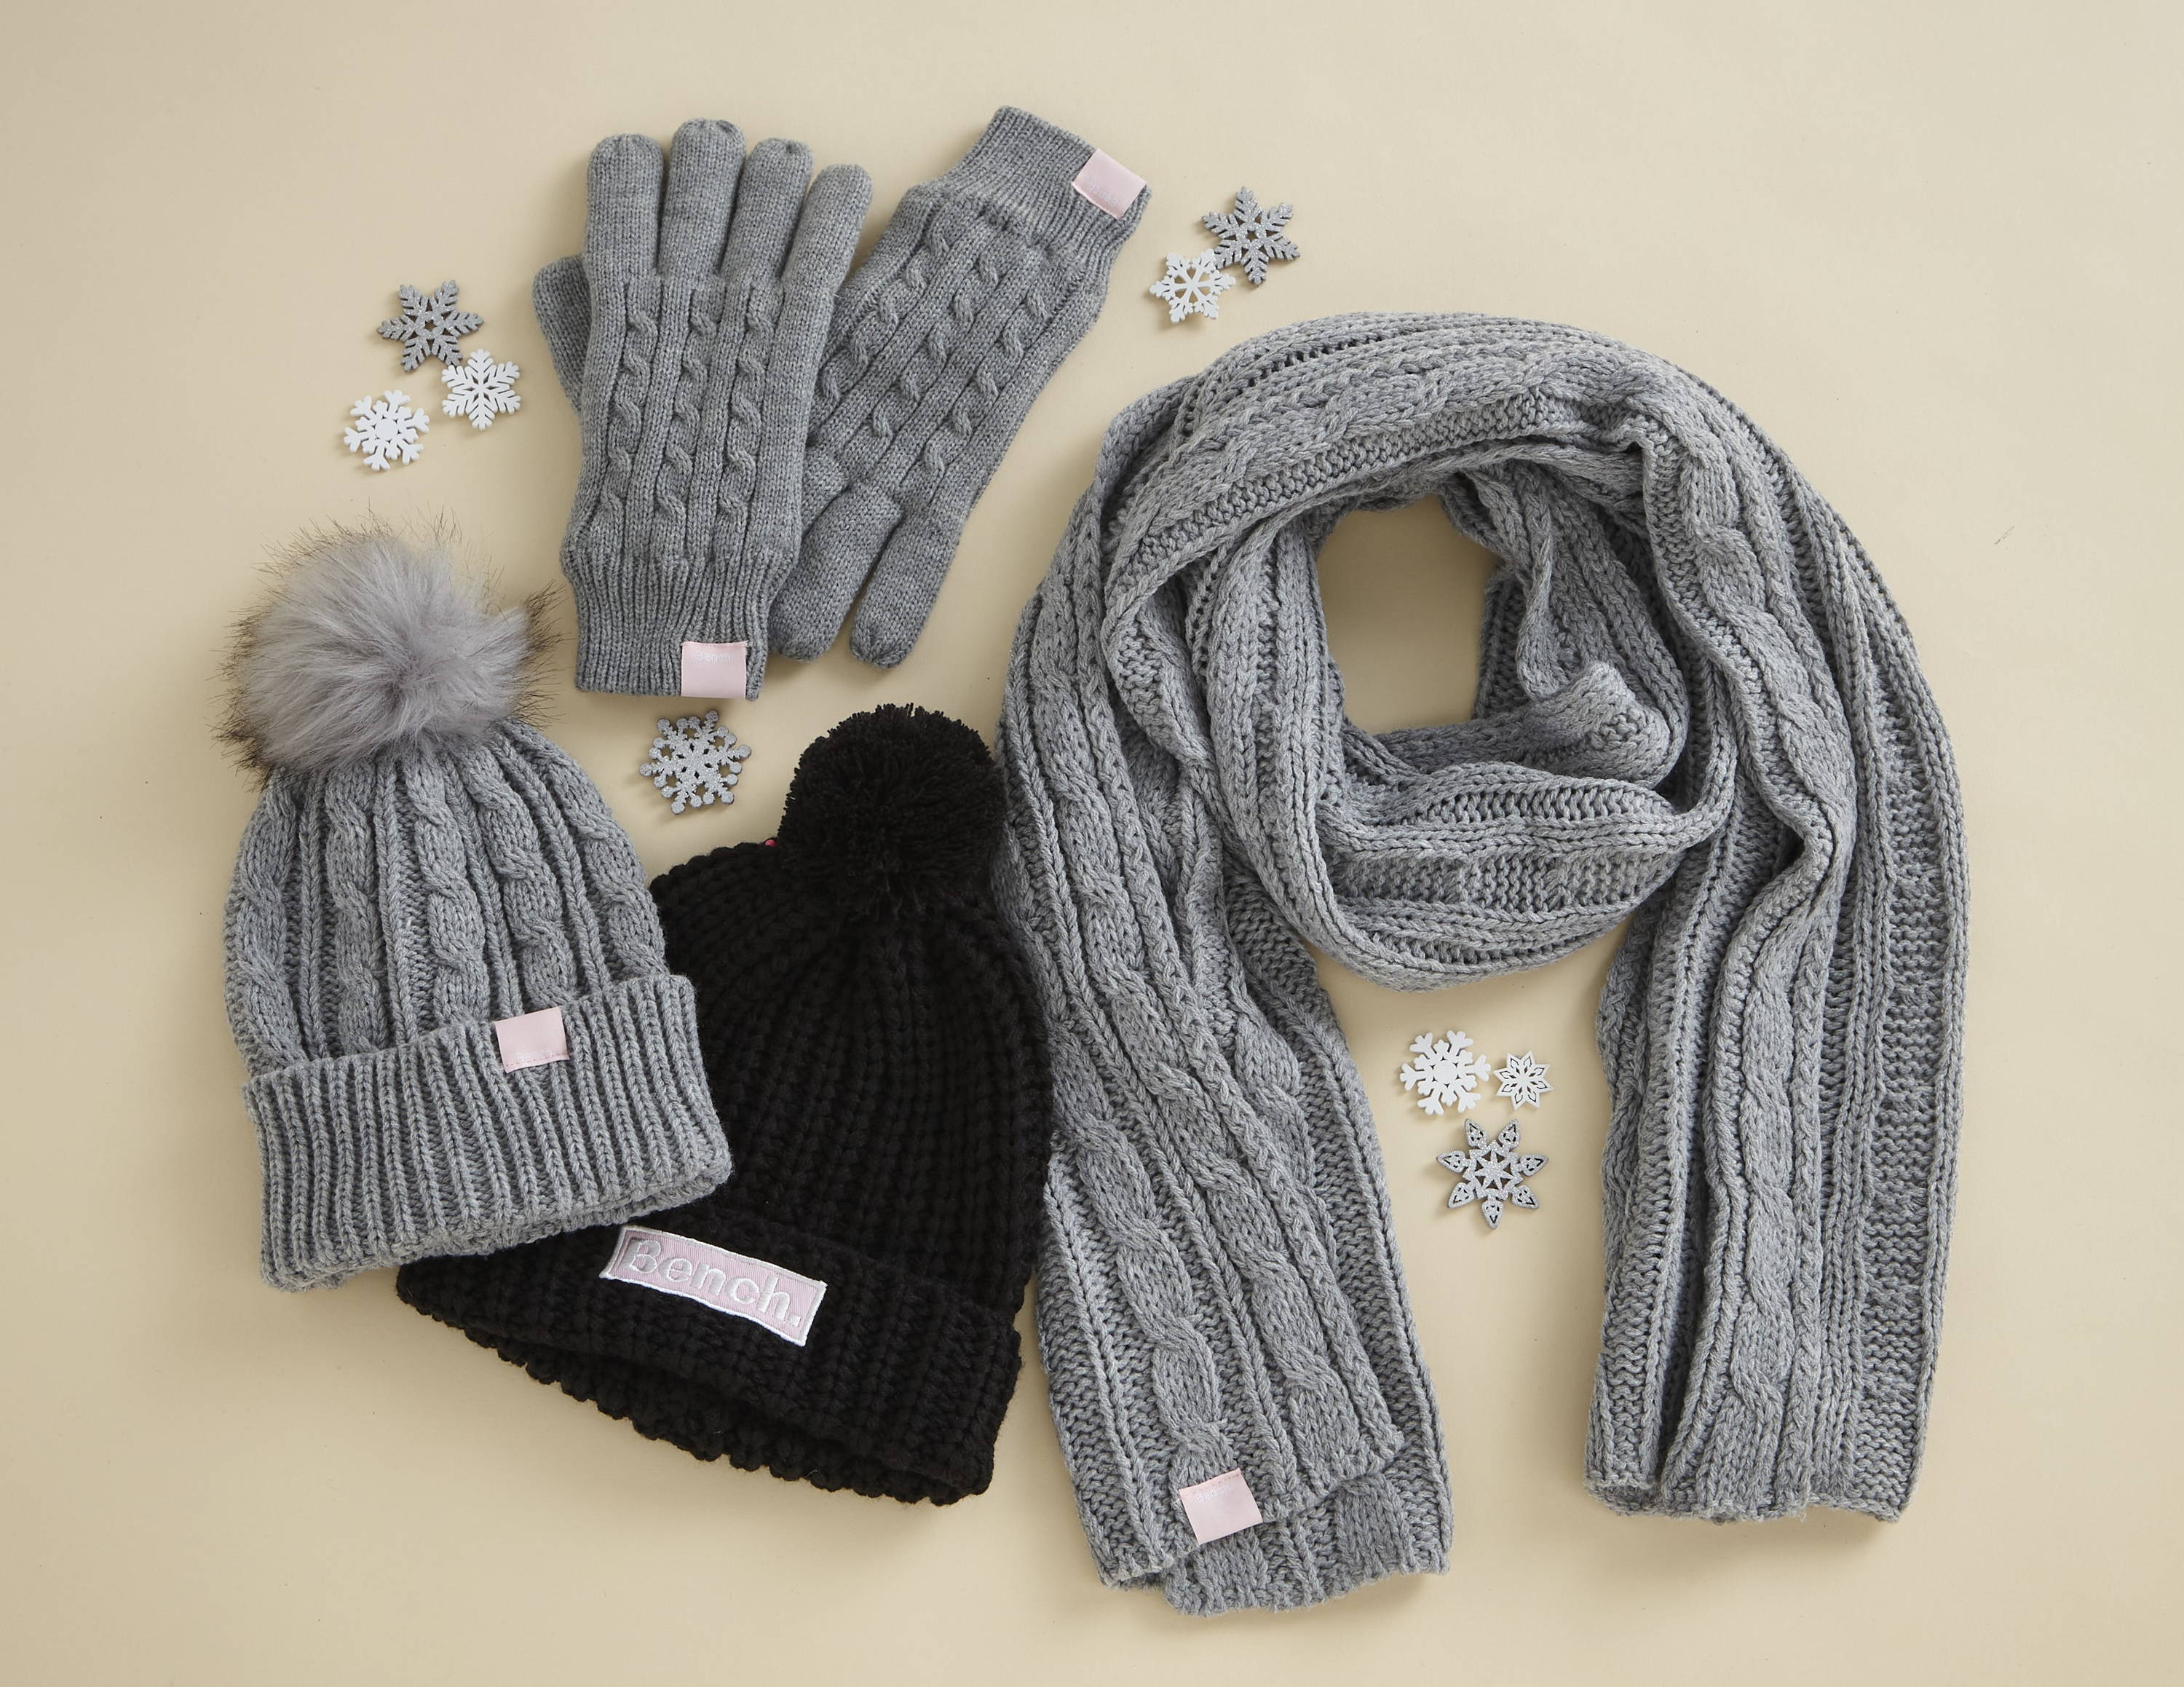 Women's autumn accessories: gloves, hats, scarves